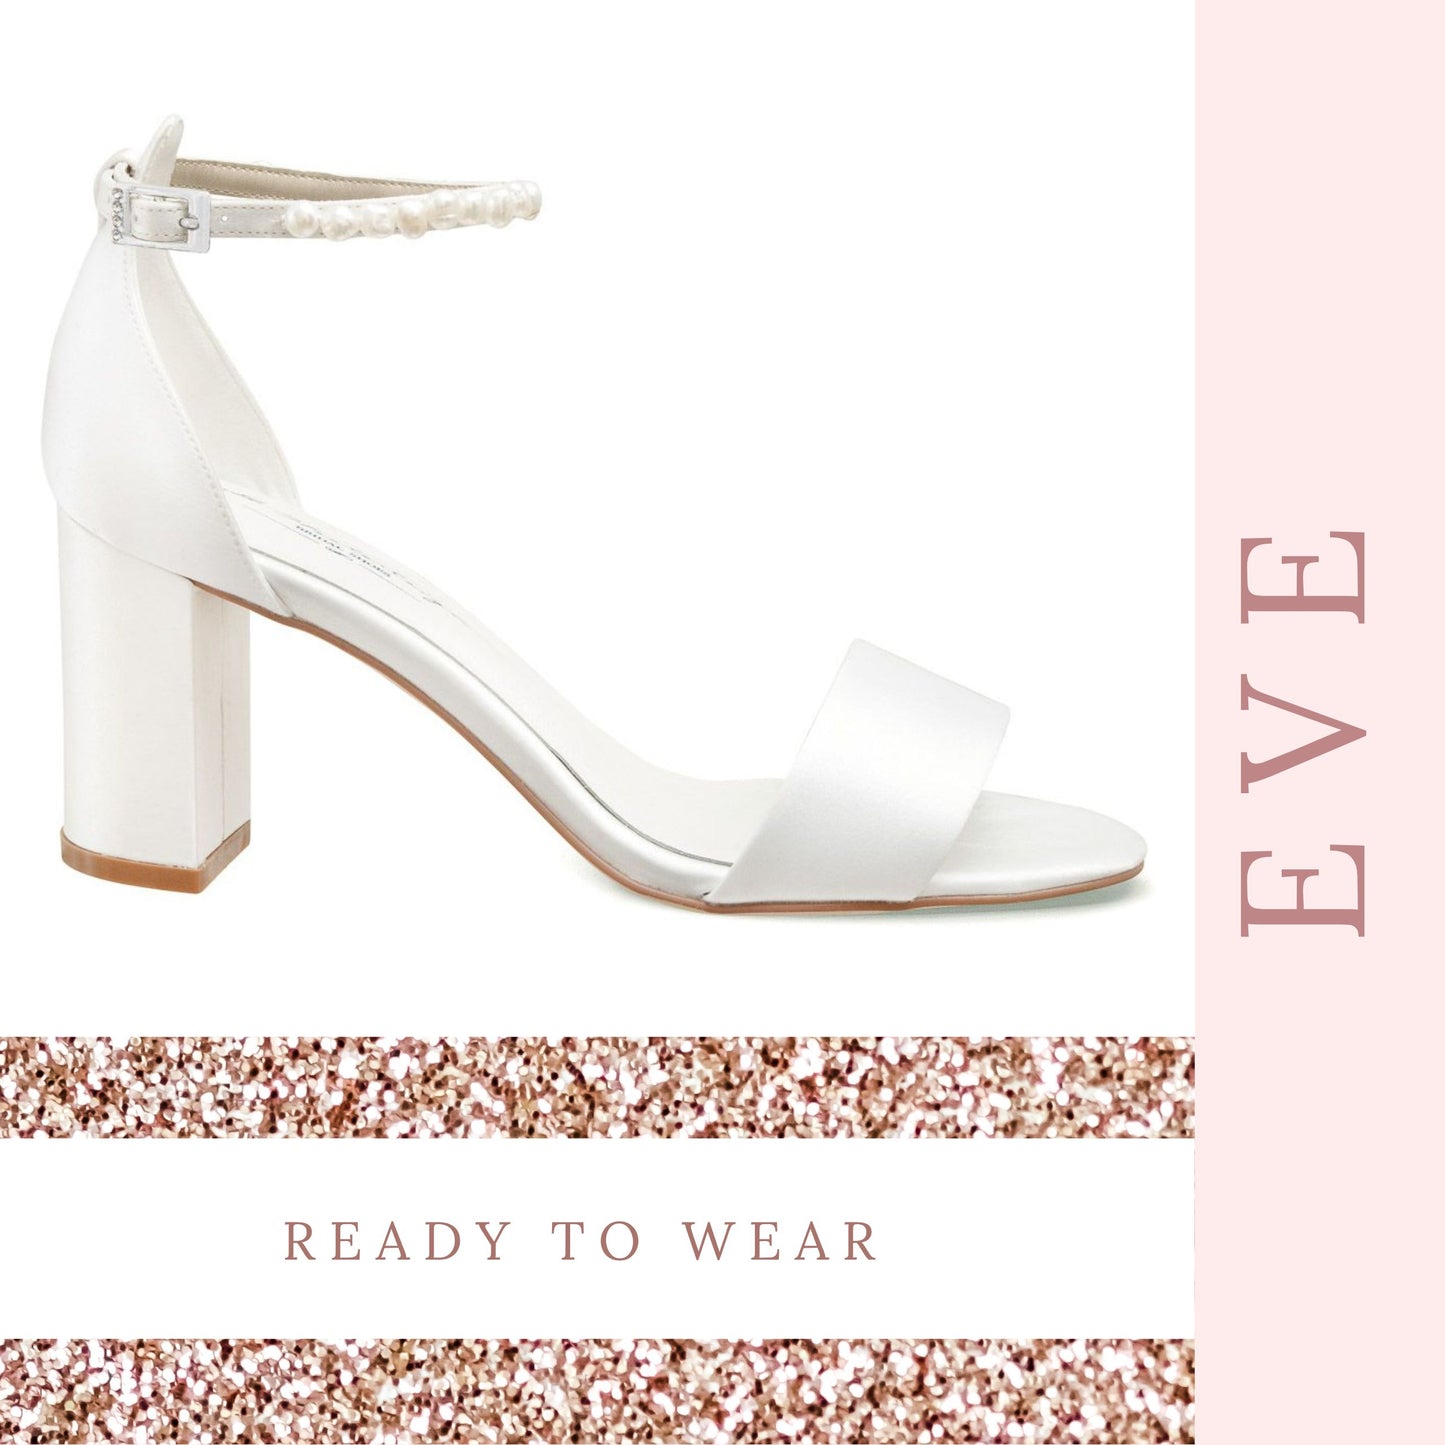 pearl-wedding-shoes-block-heel